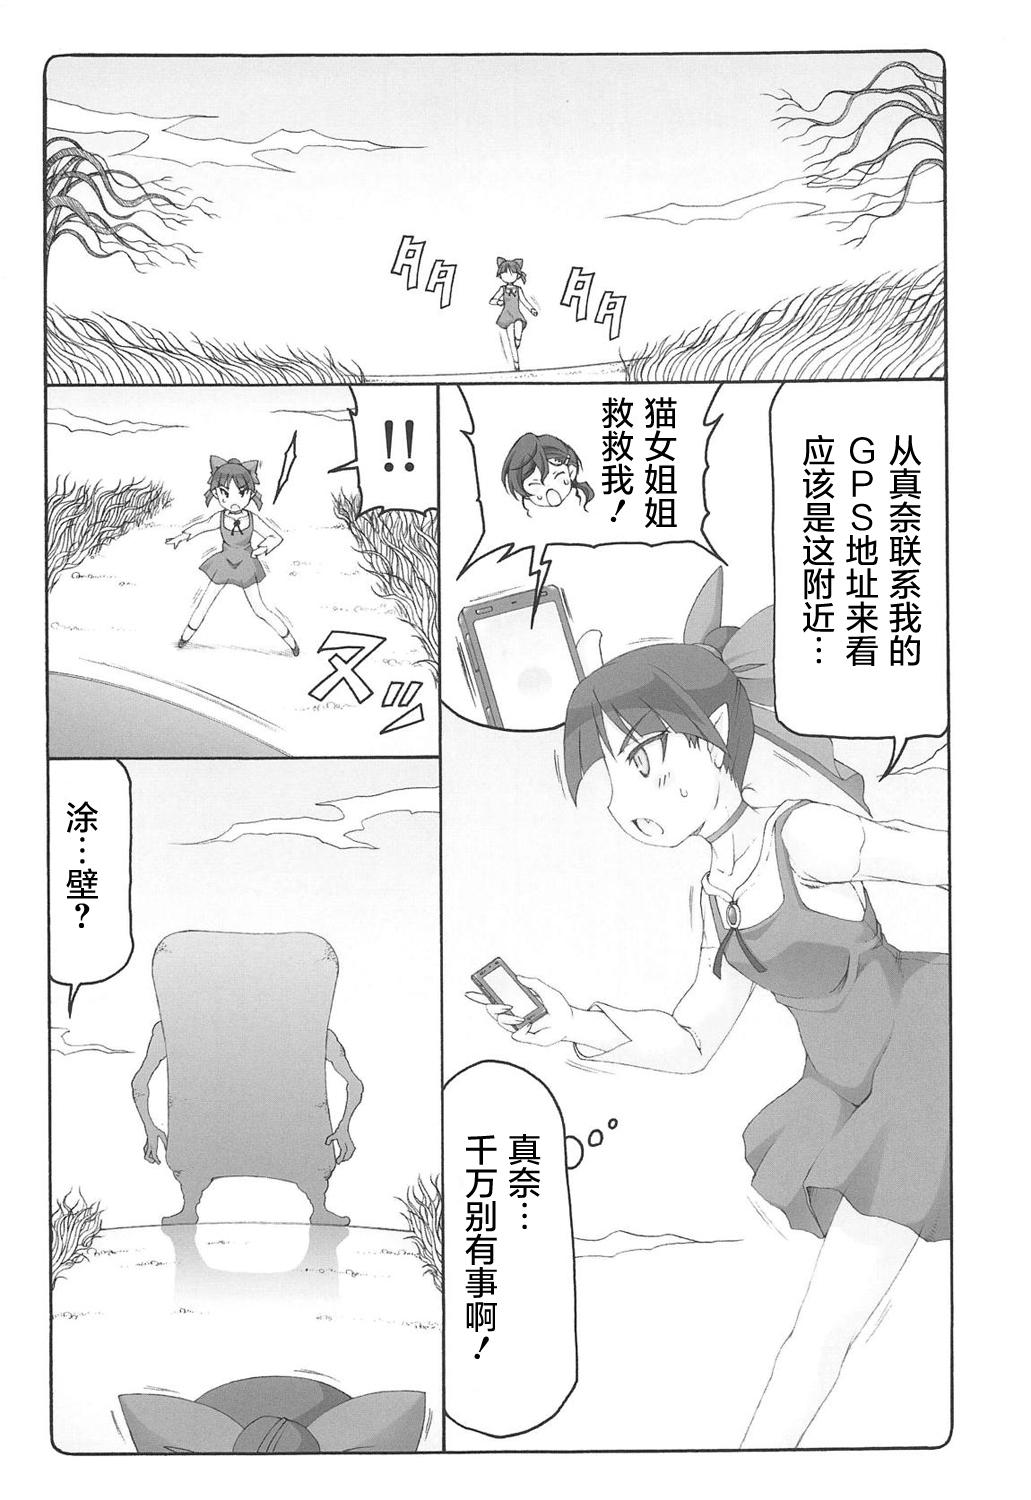 Blackmail Nuko Musume vs Youkai Shirikabe - Gegege no kitarou College - Page 5